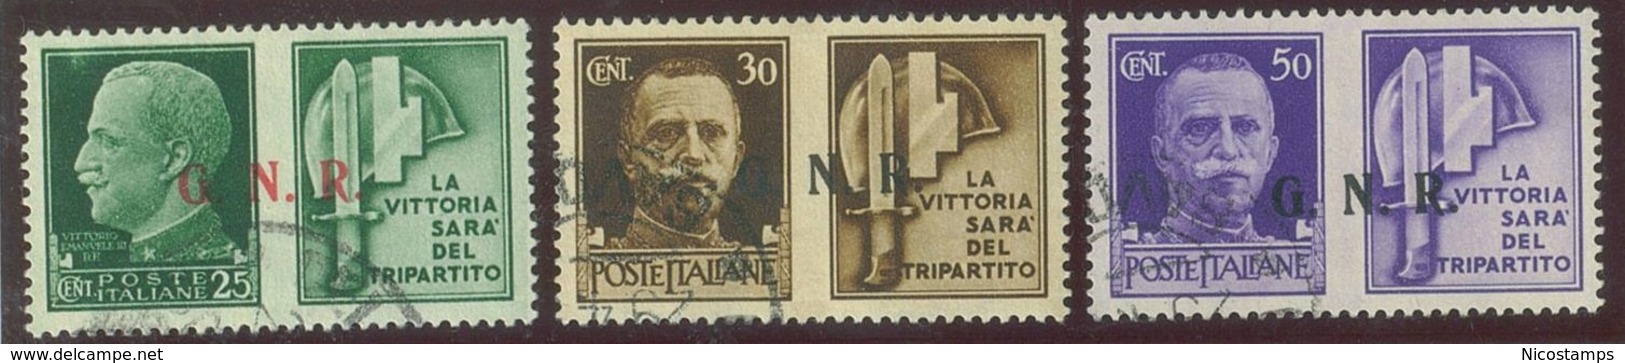 ITALIA REPUBBLICA SOCIALE ITALIANA (R.S.I.) SASS. P.G. 13/III - 24/III  USATI - War Propaganda